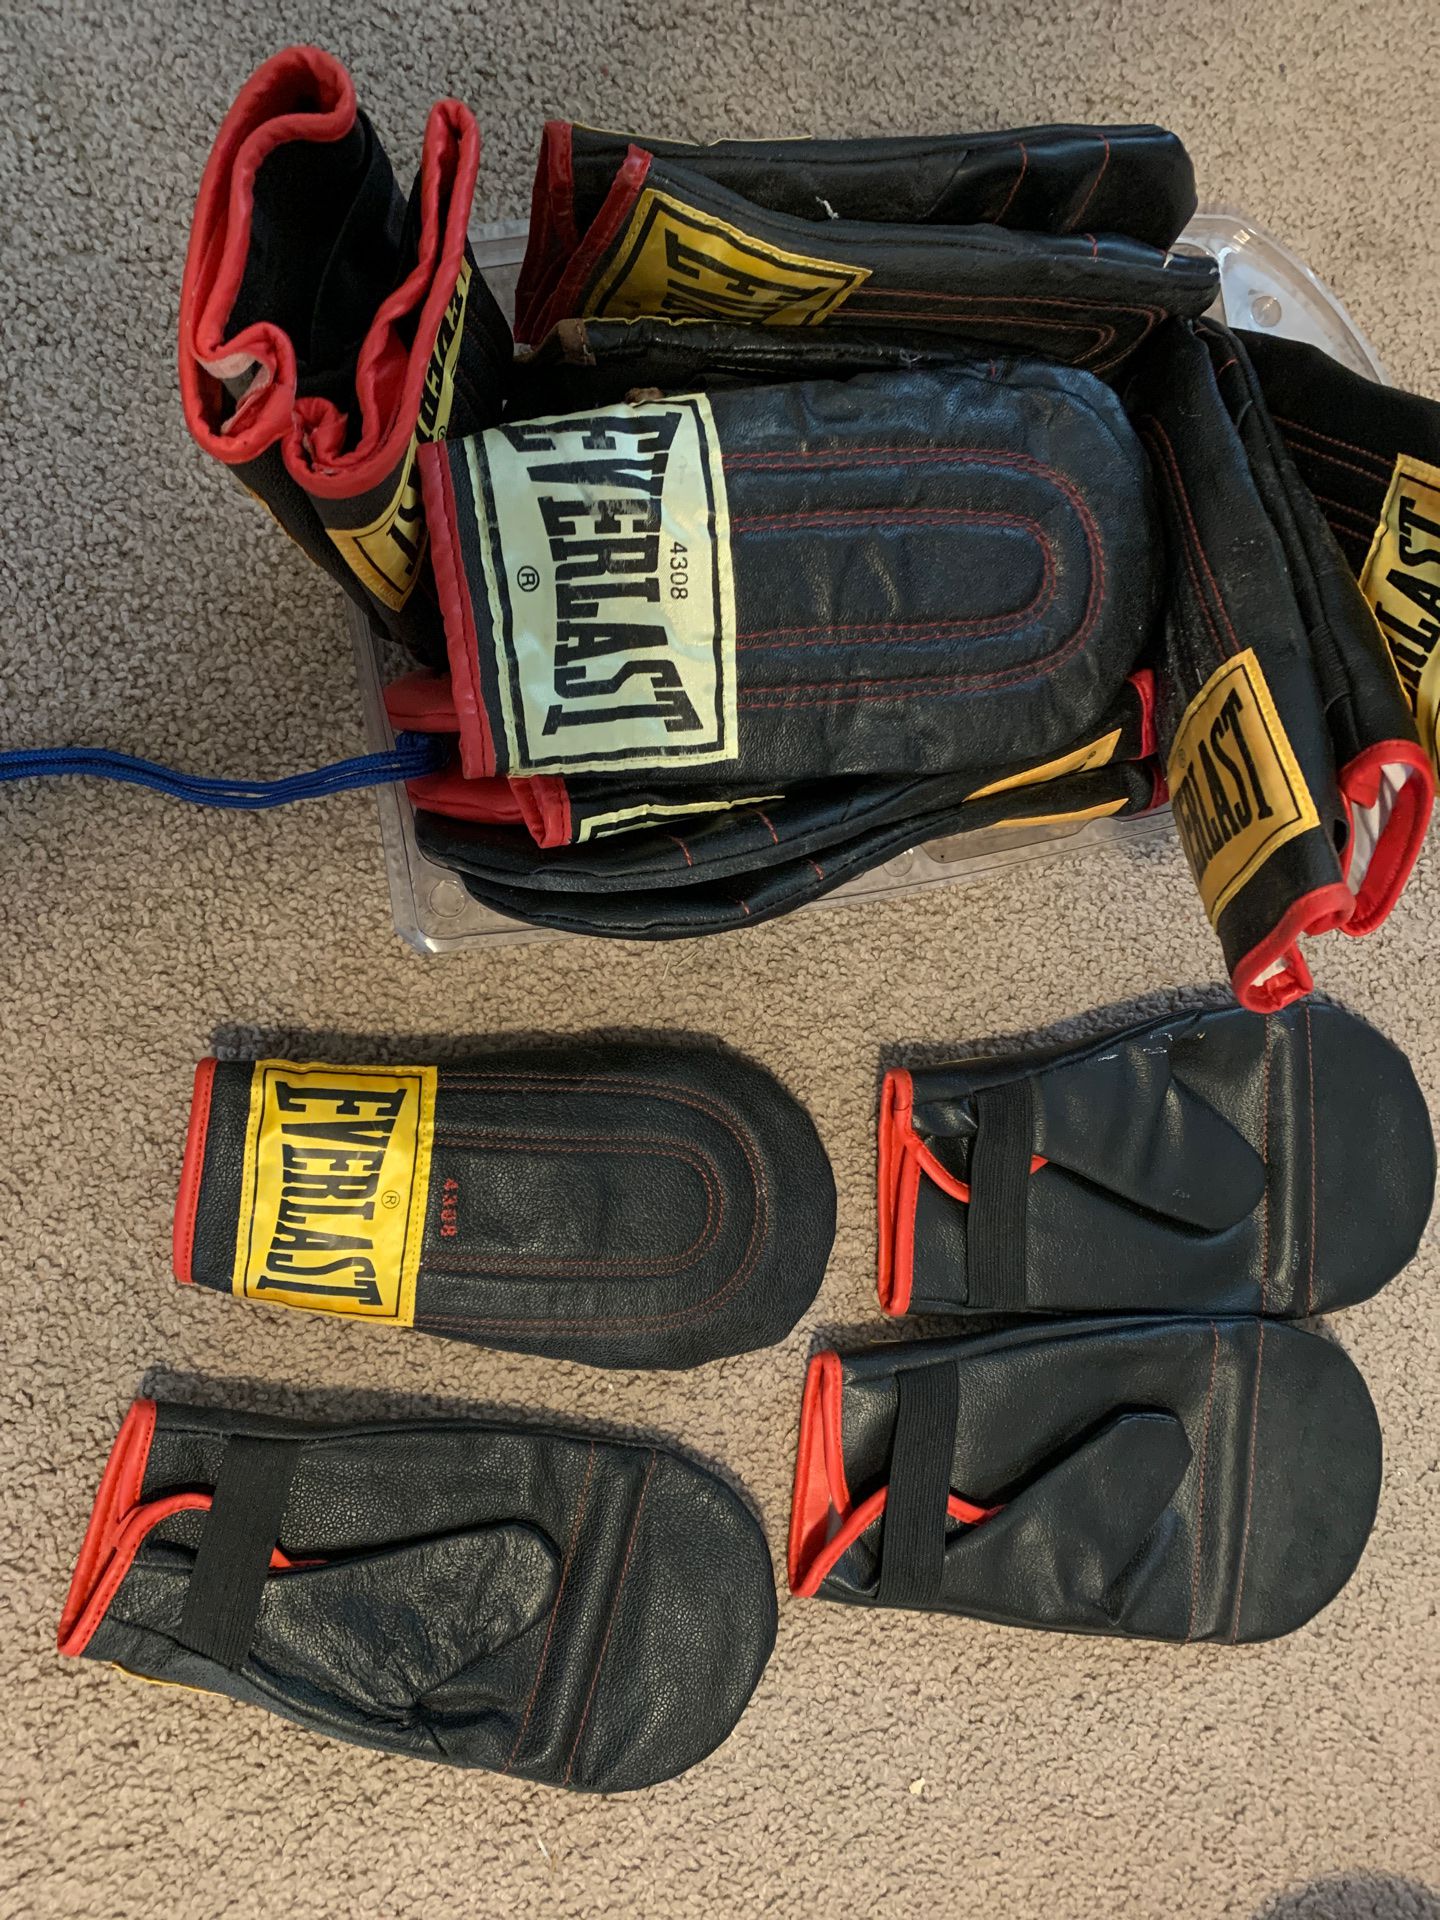 Everlast weighted speed bag gloves